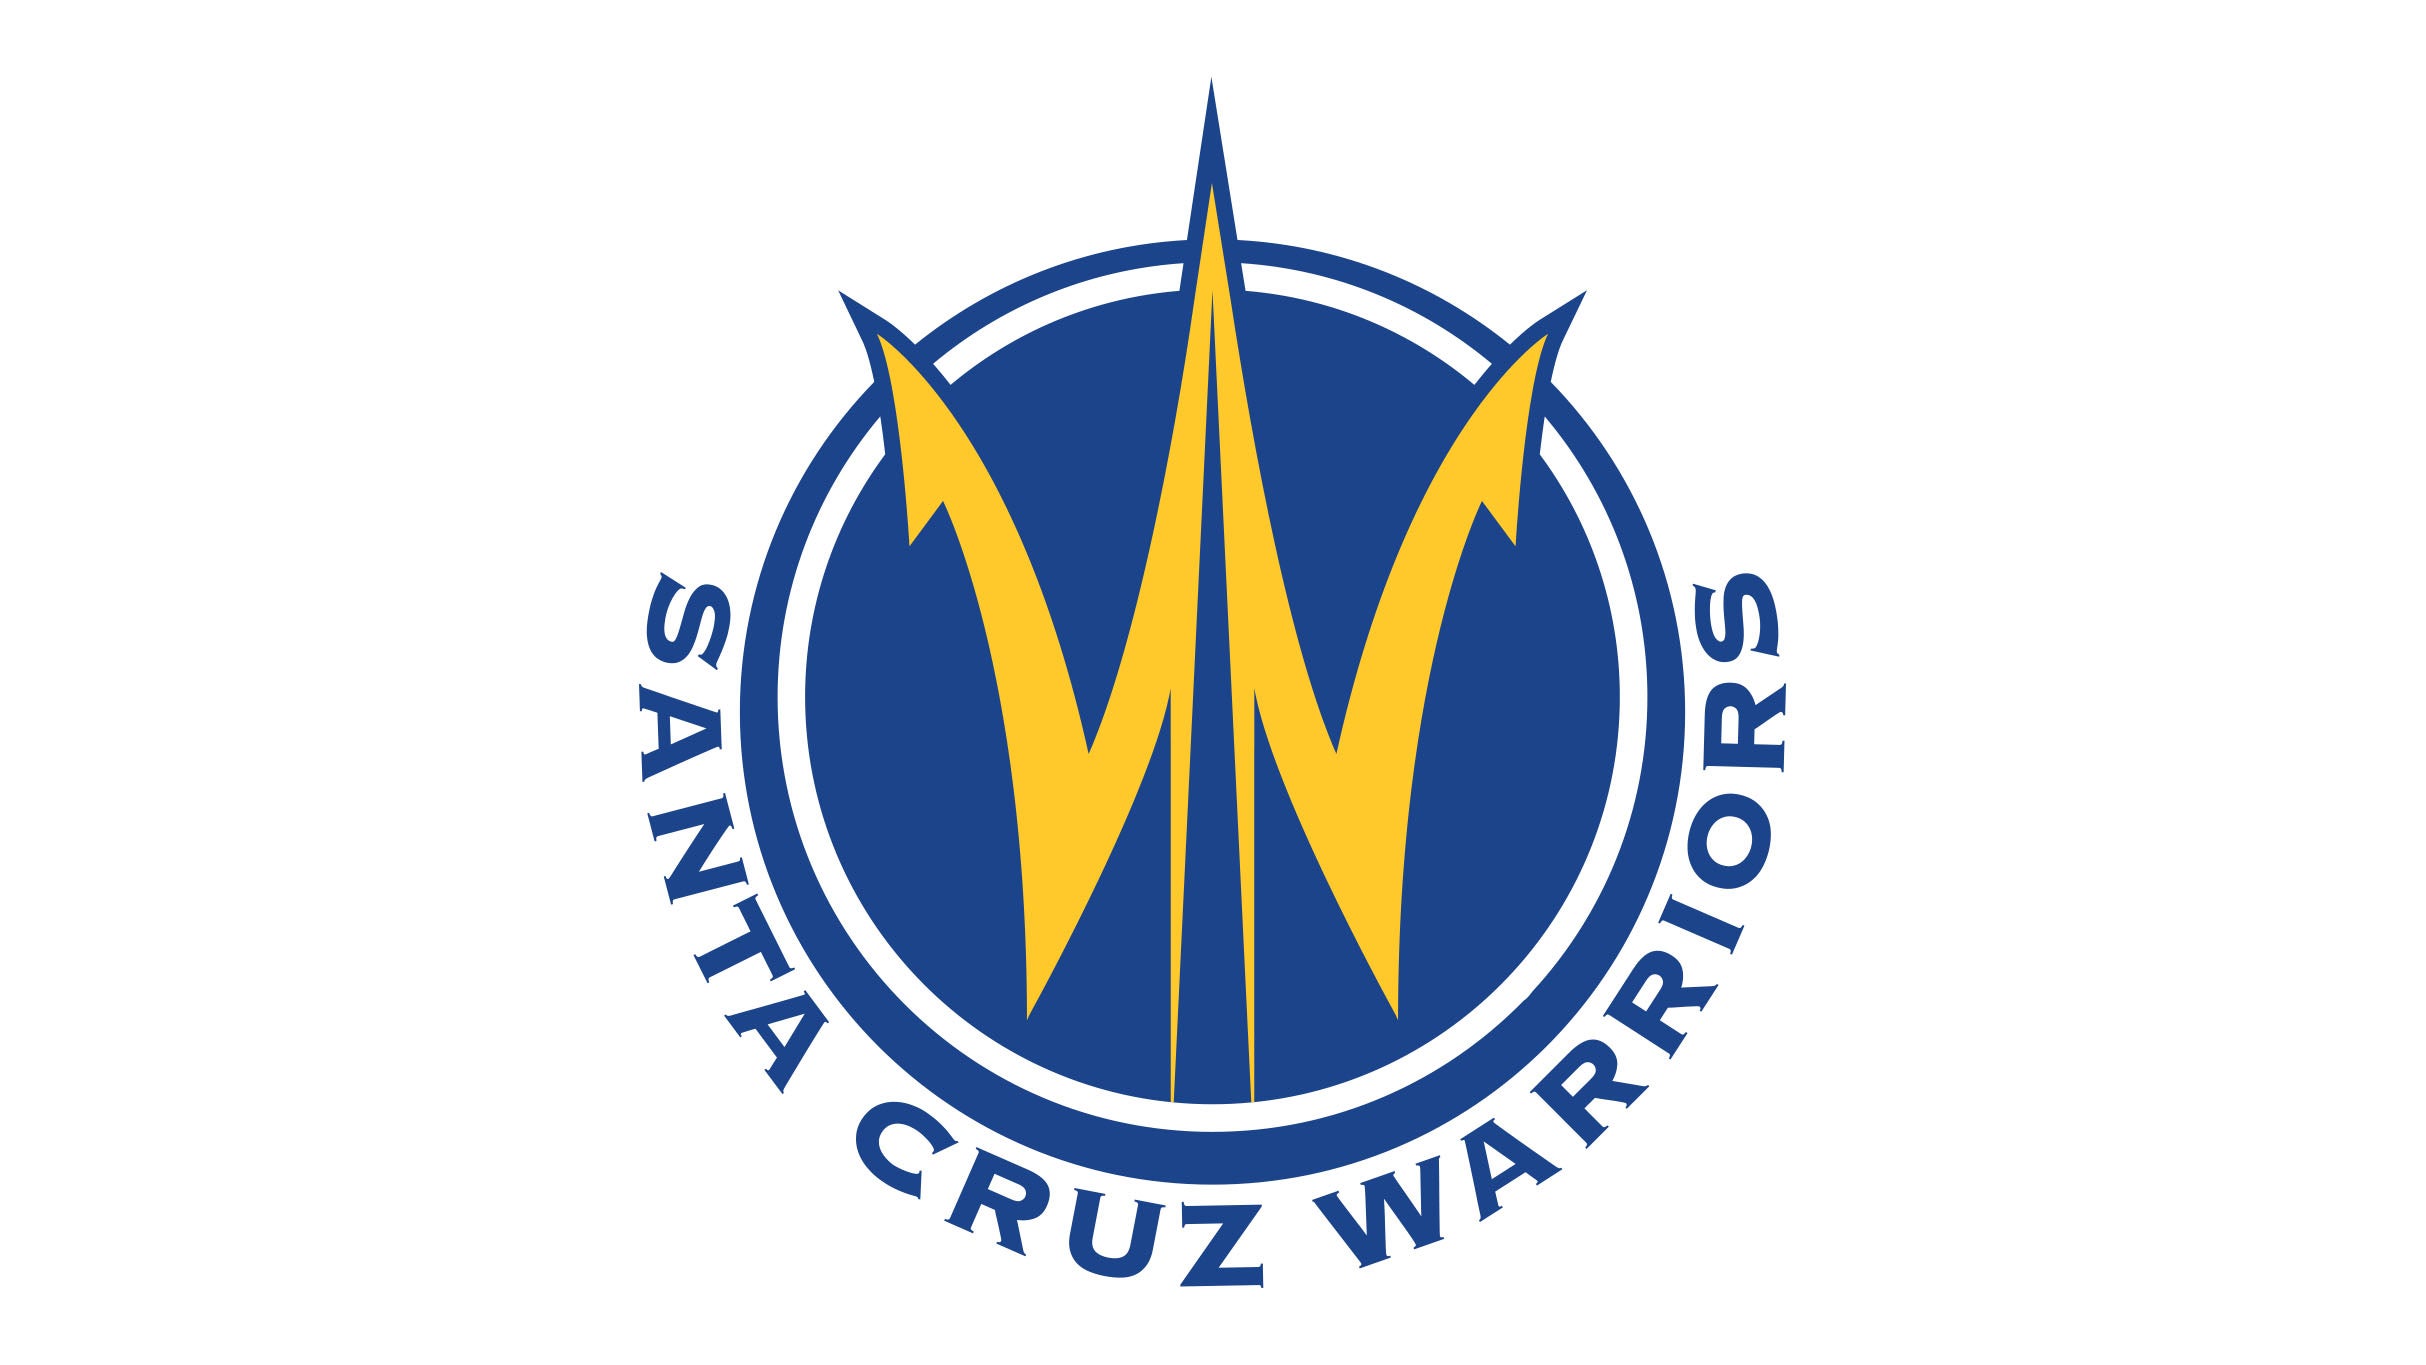 Santa Cruz Warriors vs. Texas Legends in Santa Cruz promo photo for Dub Club presale offer code